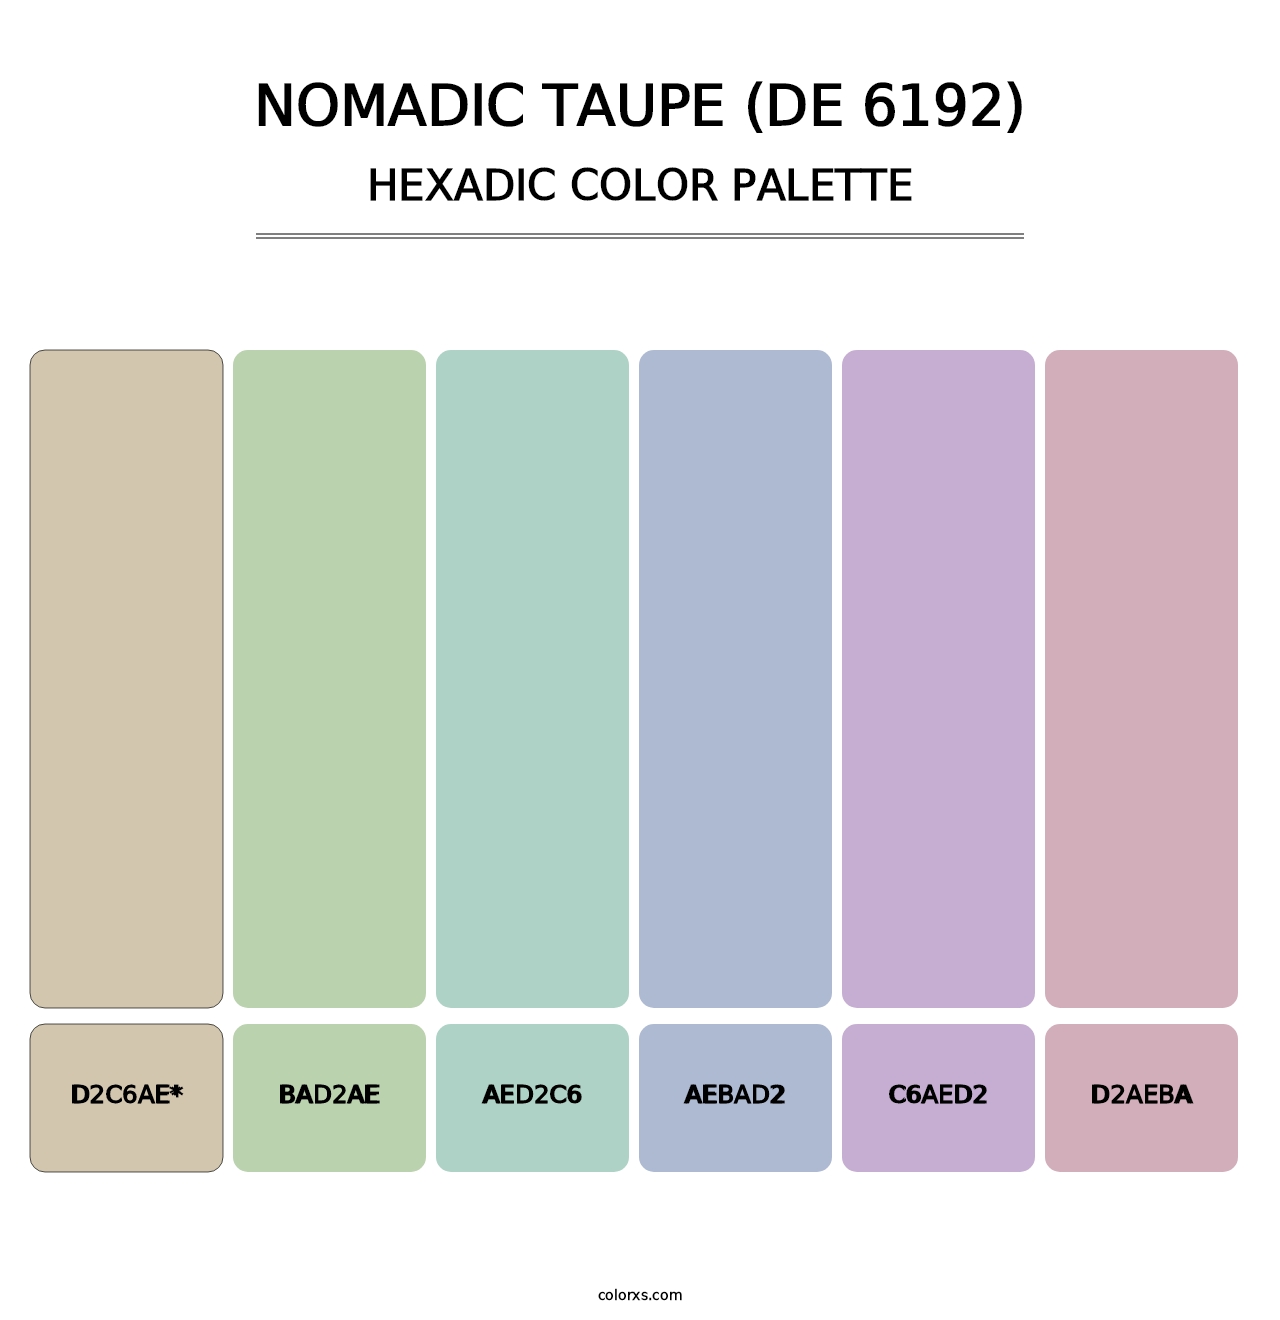 Nomadic Taupe (DE 6192) - Hexadic Color Palette